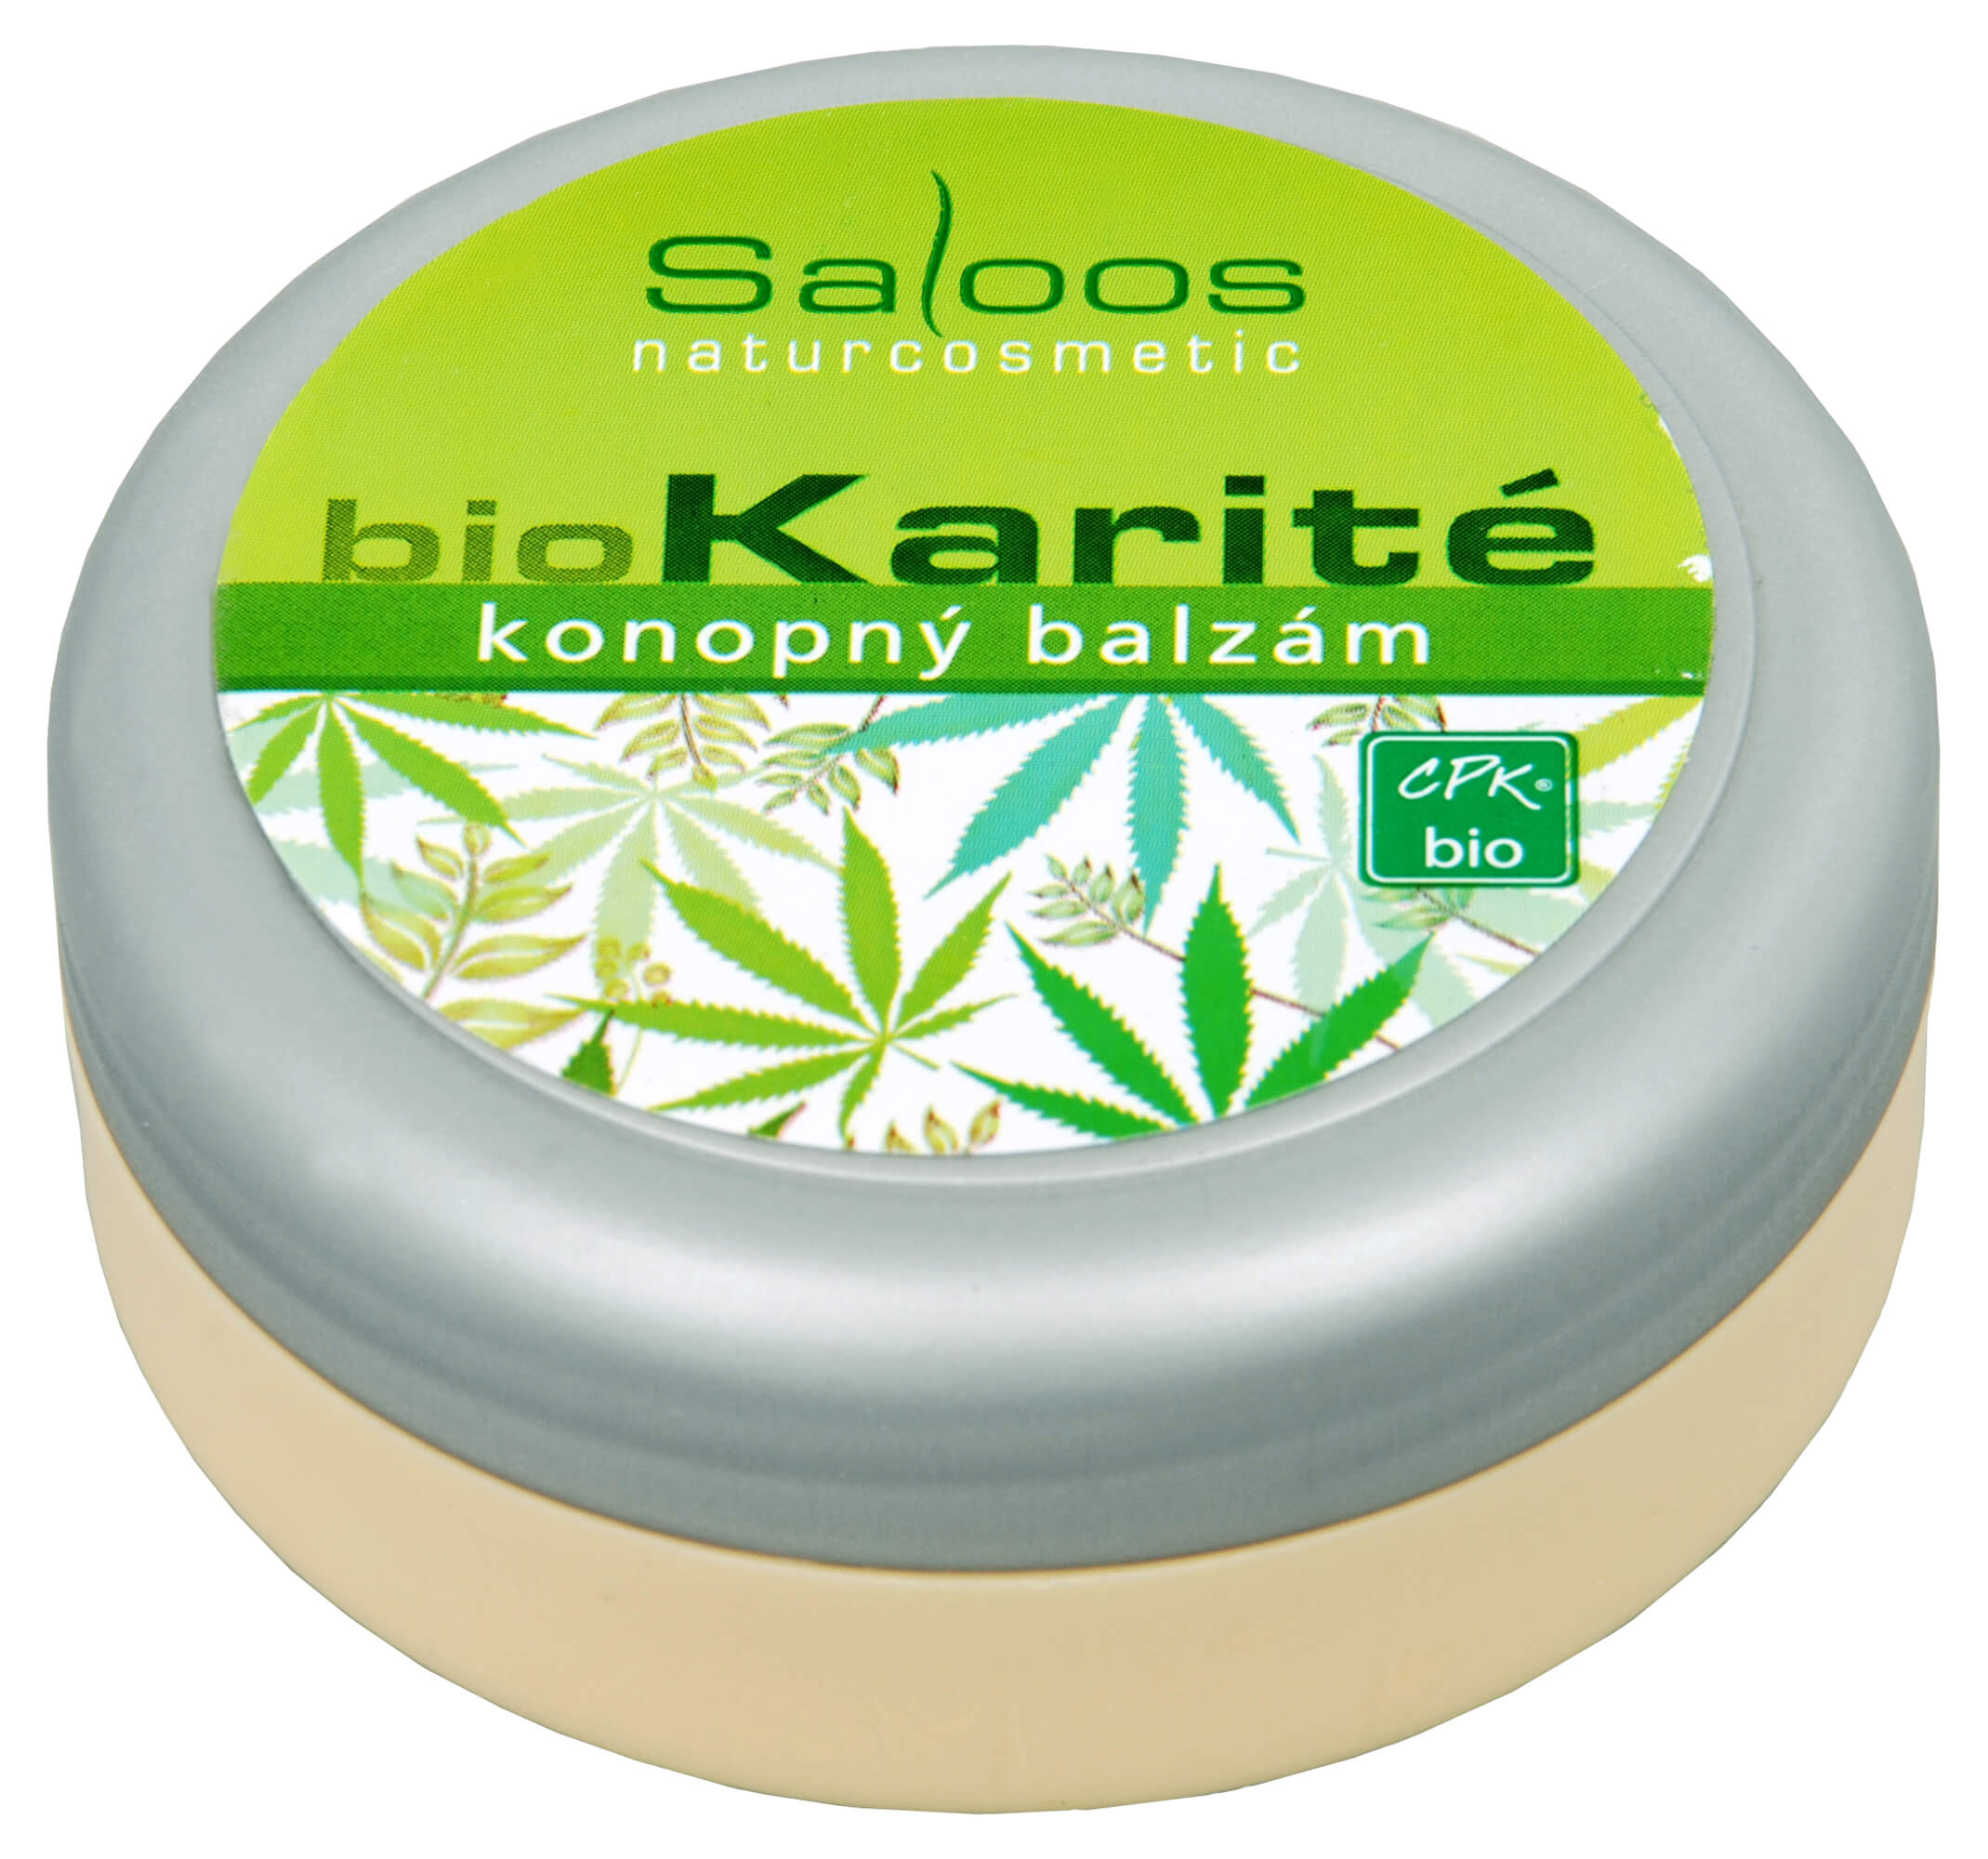 Zobrazit detail výrobku Saloos Bio Karité balzám - Konopný 50 ml